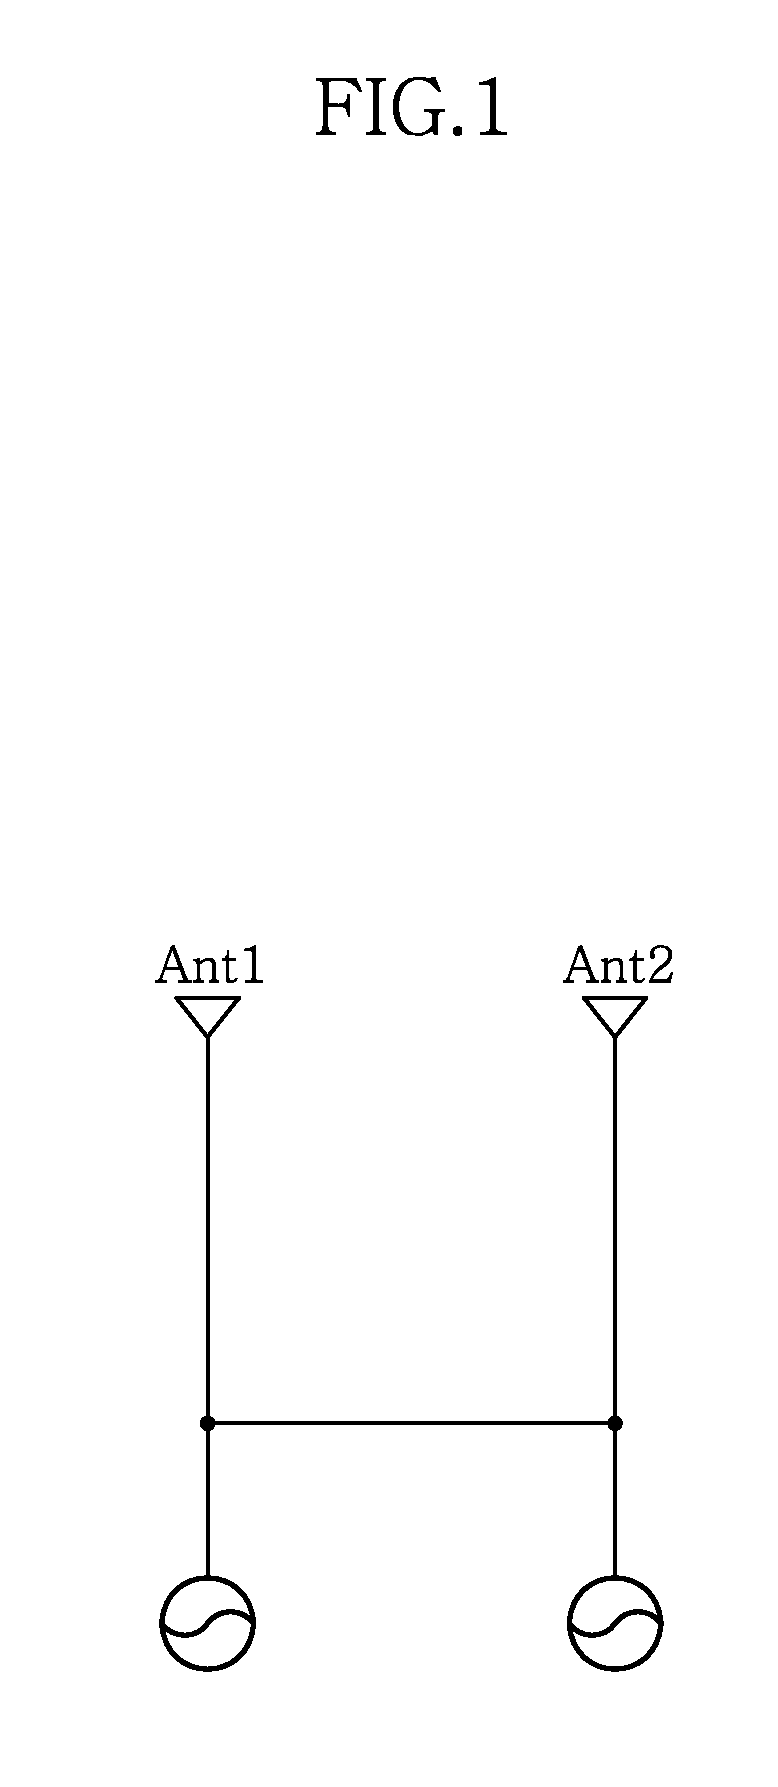 Multi-Input Multi-Output antenna with multi-band characteristic